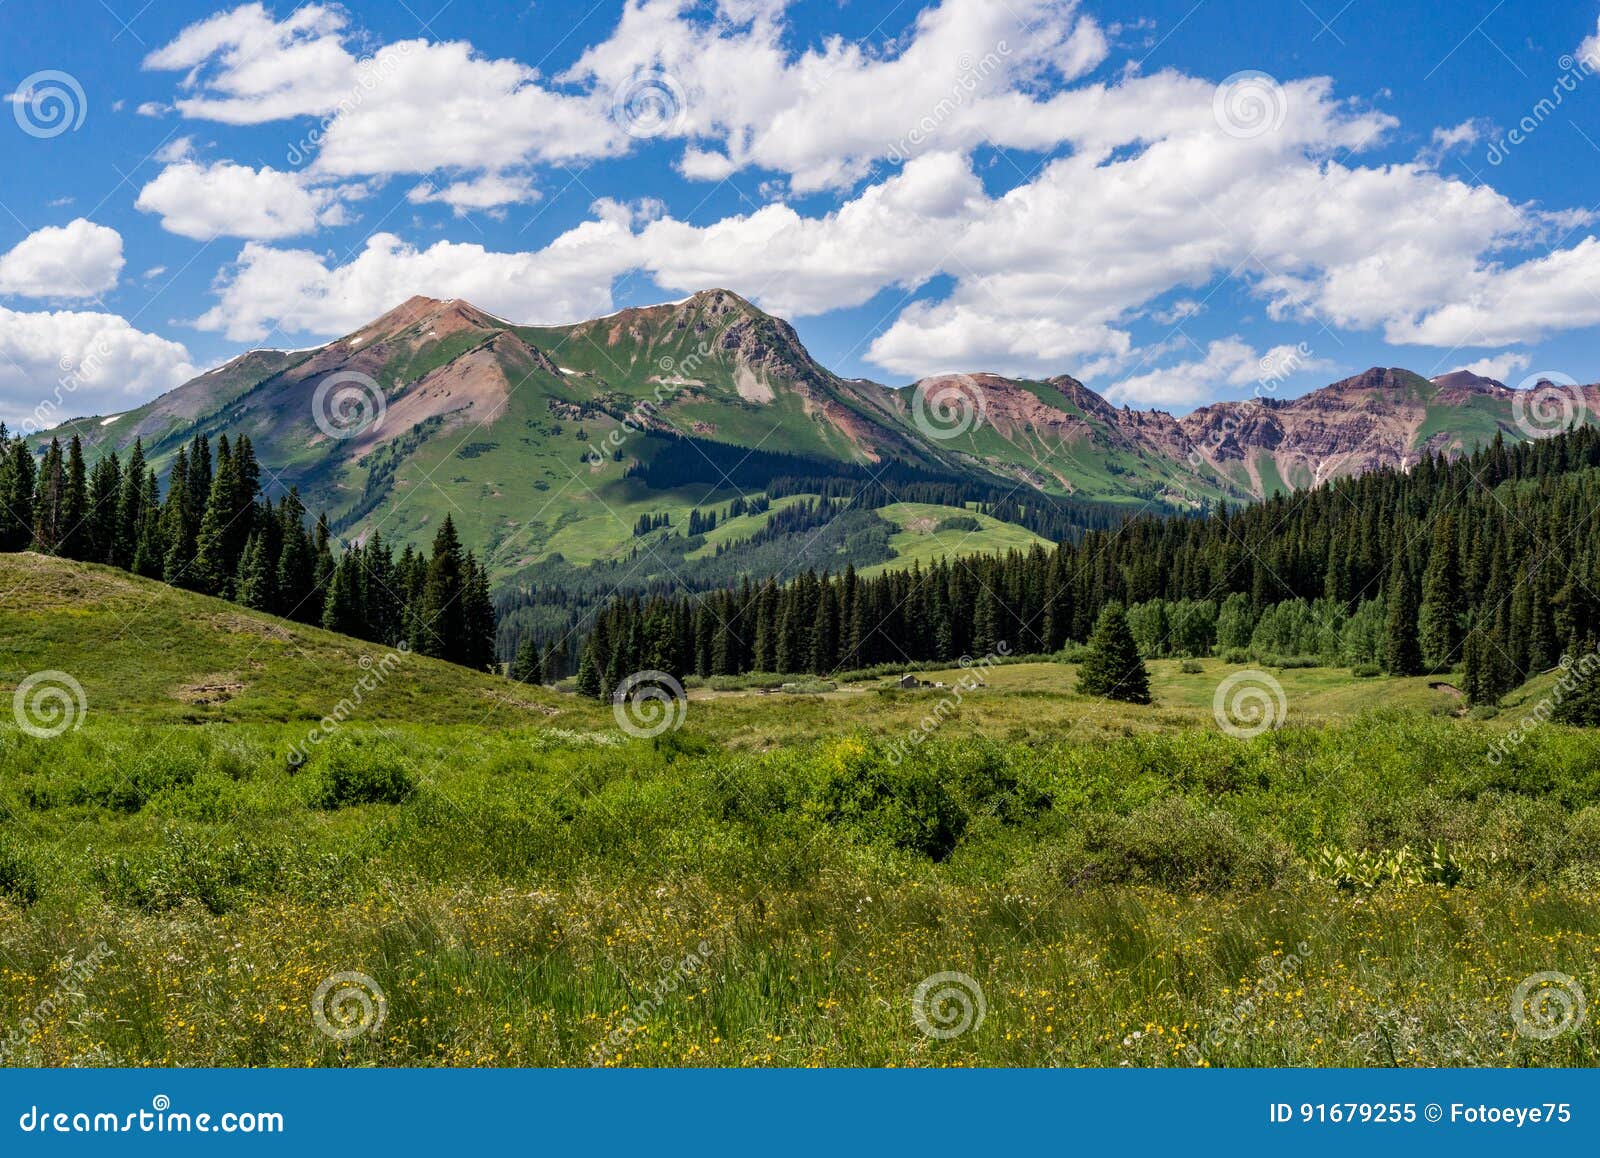 crested butte colorado mountain landscape